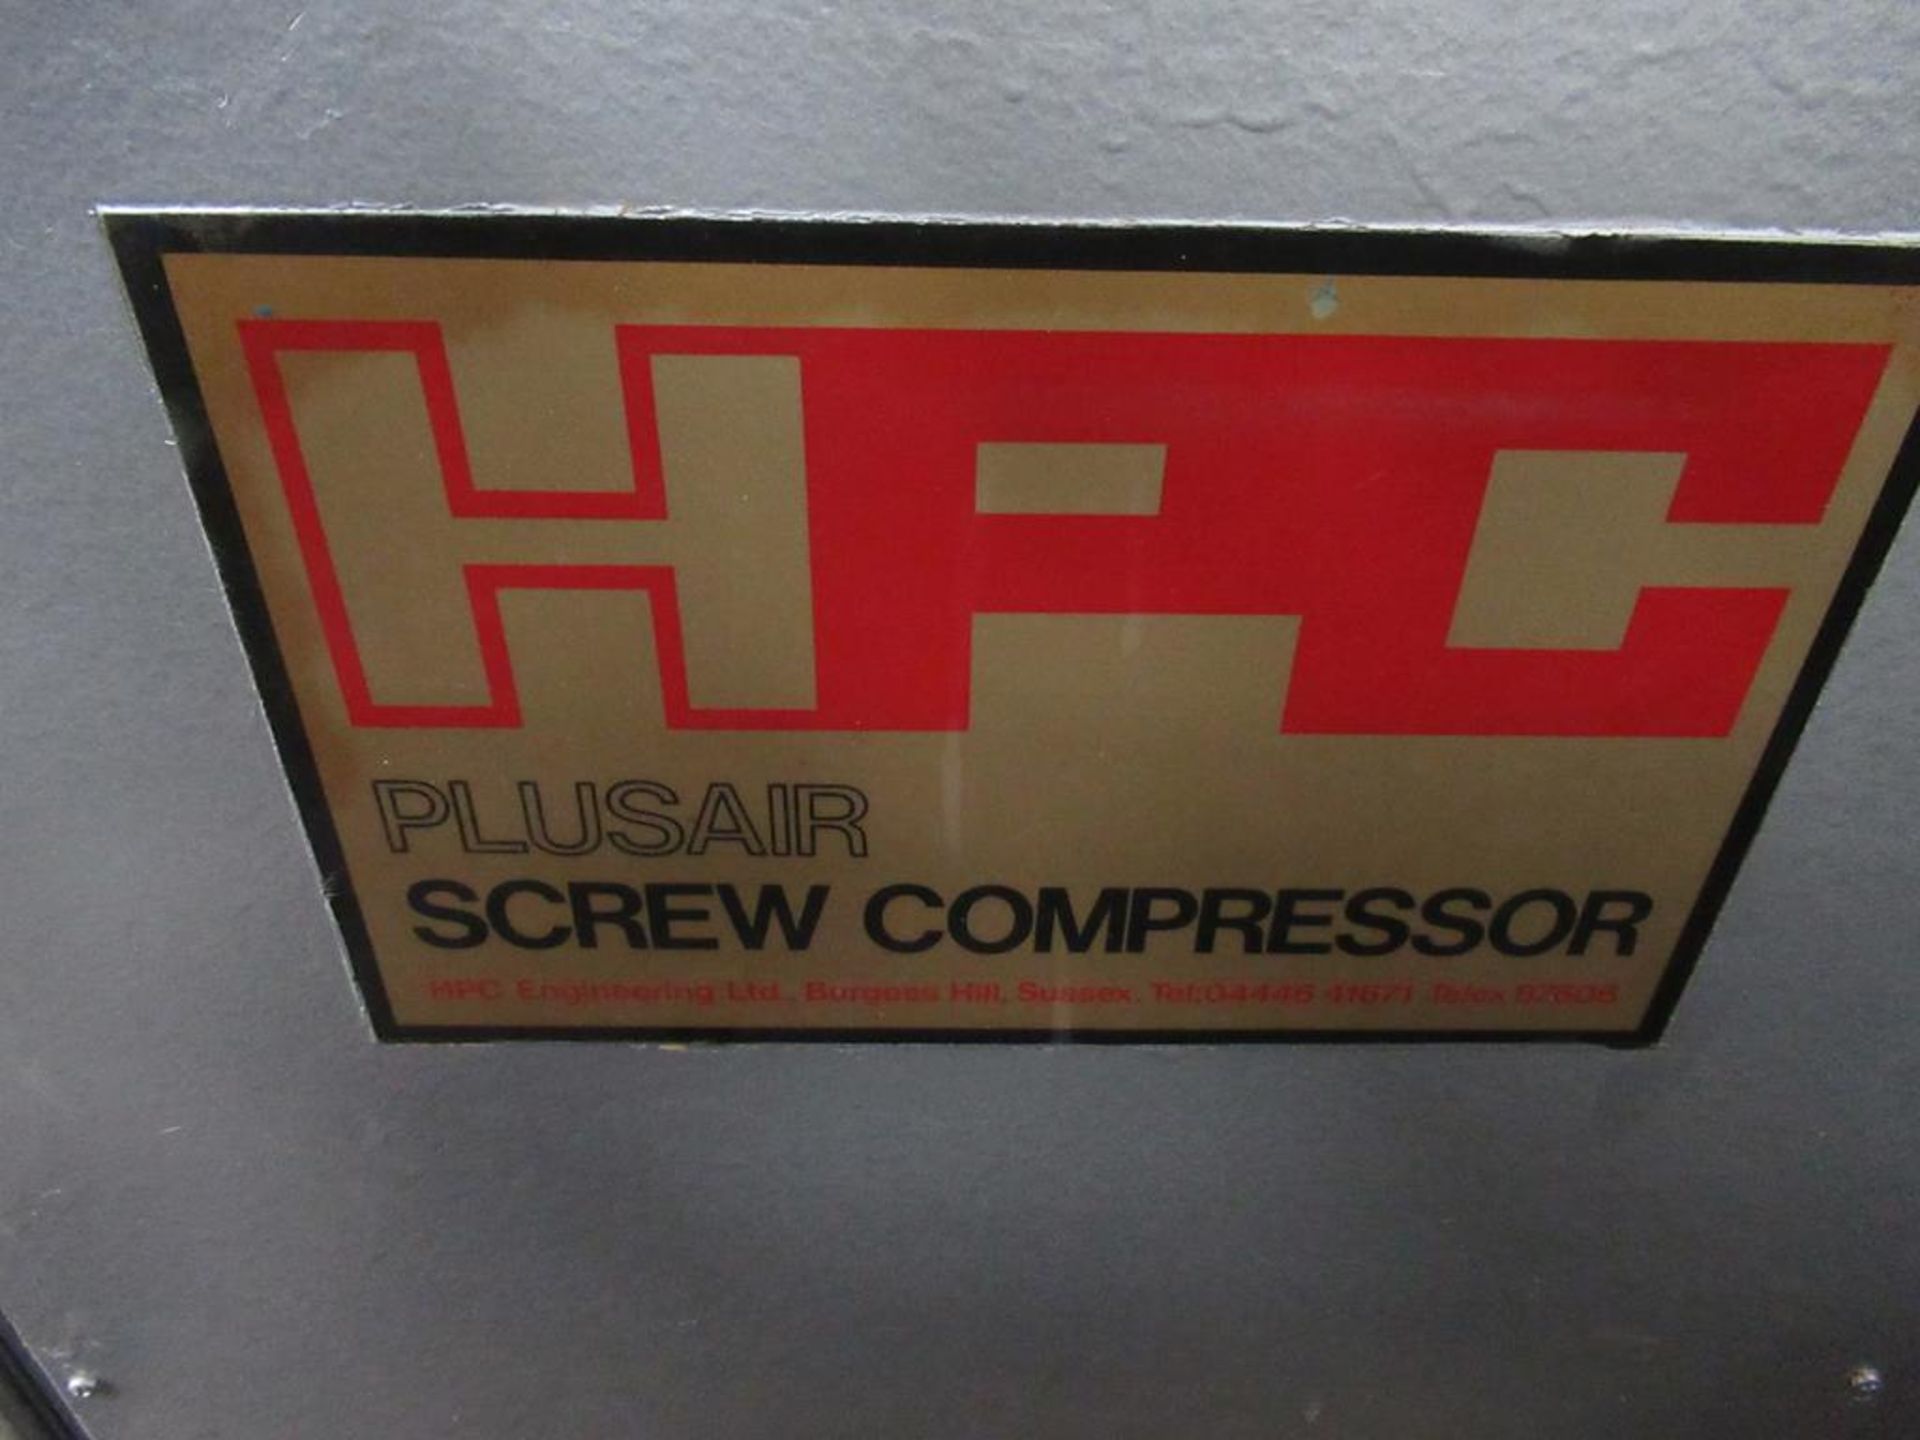 HPC Pulsair SK19 Screw Compressor safe working pressure 7.5 bar Hours 25829 3 phase - Image 5 of 10